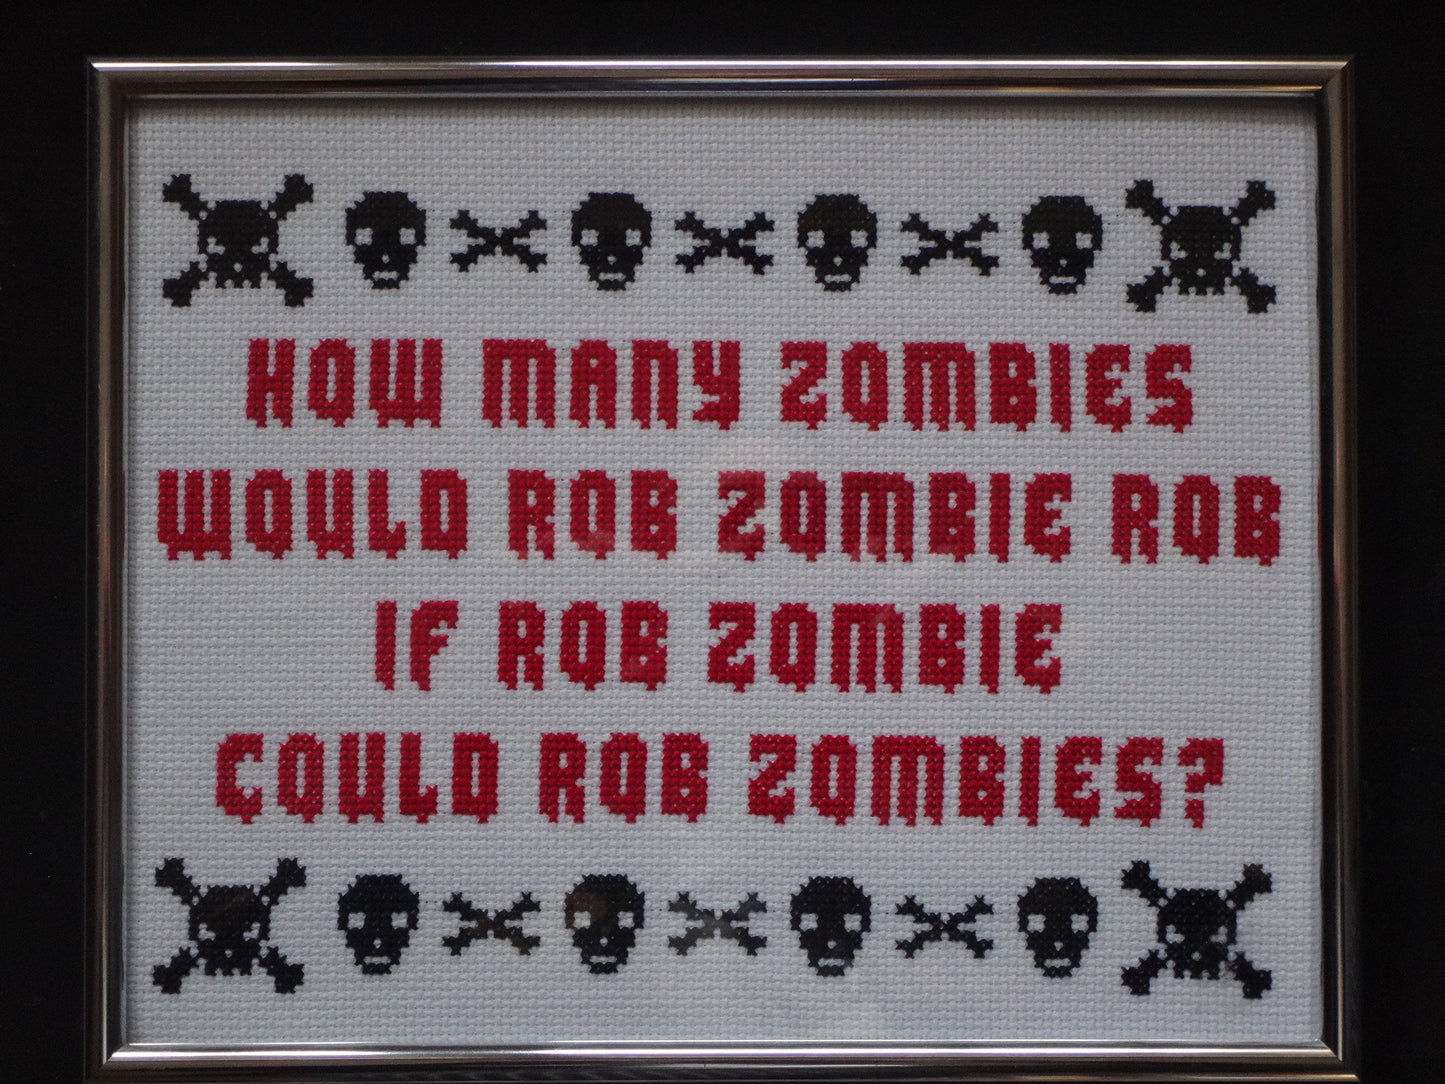 Rob Zombie cross stitch pattern